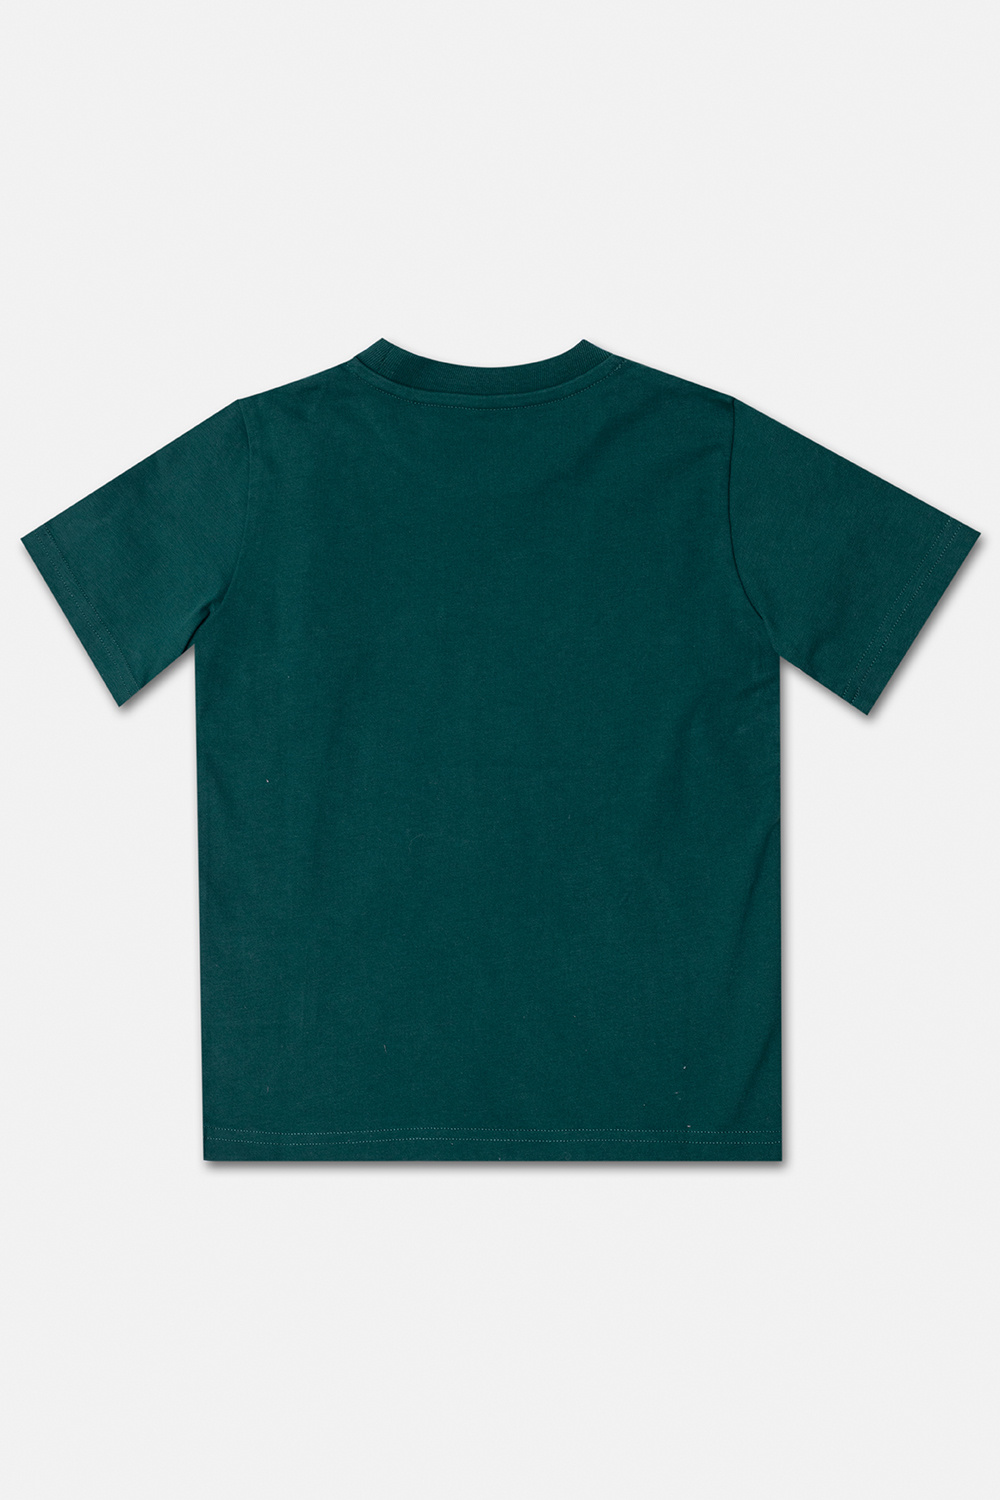 Moncler Enfant Polo Ralph Lauren poplin Joggers shirt